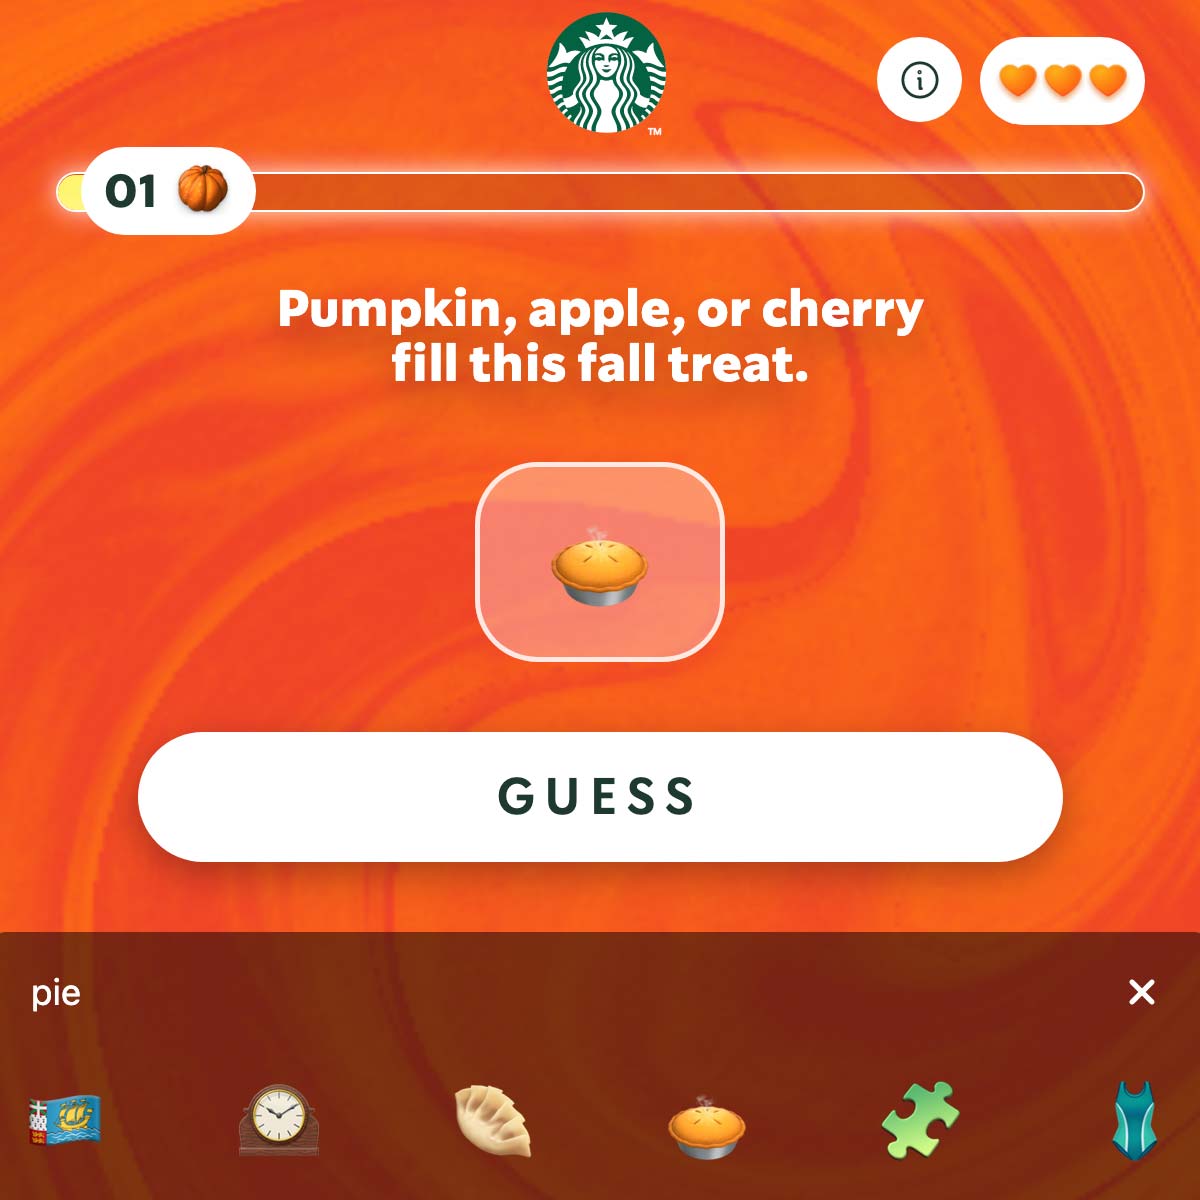 Starbucks Pumpkin Portal To Fall Game Answer 1.